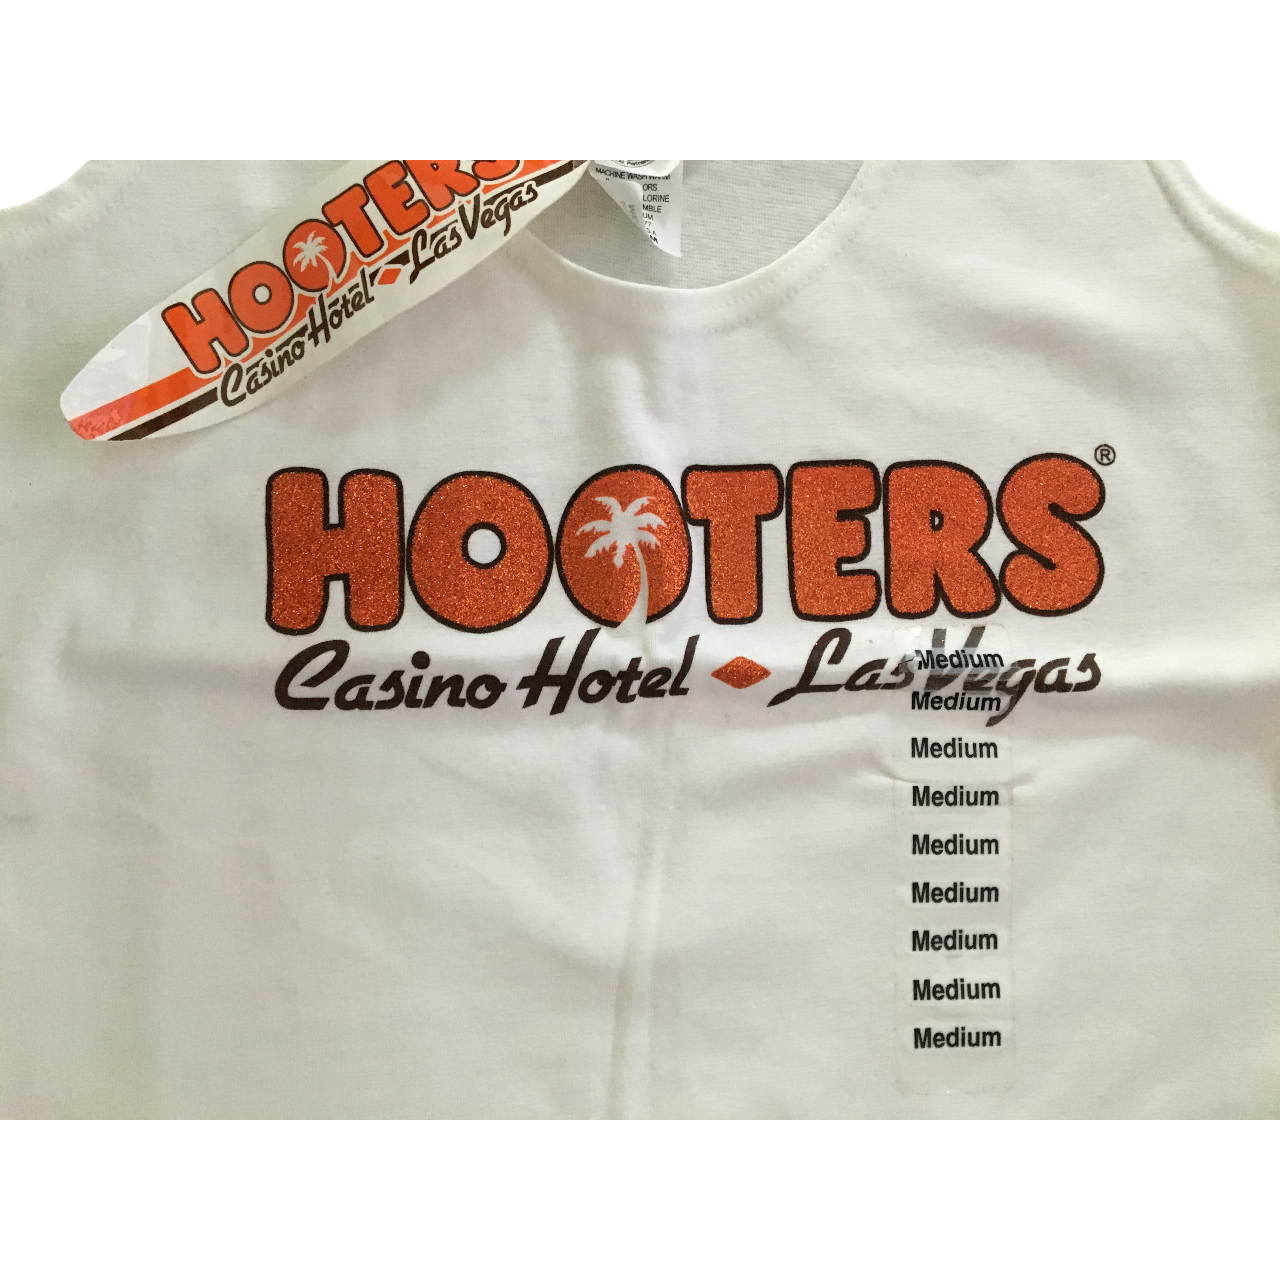 Hooters Women's Casino Hotel Las Vegas White Tank Top